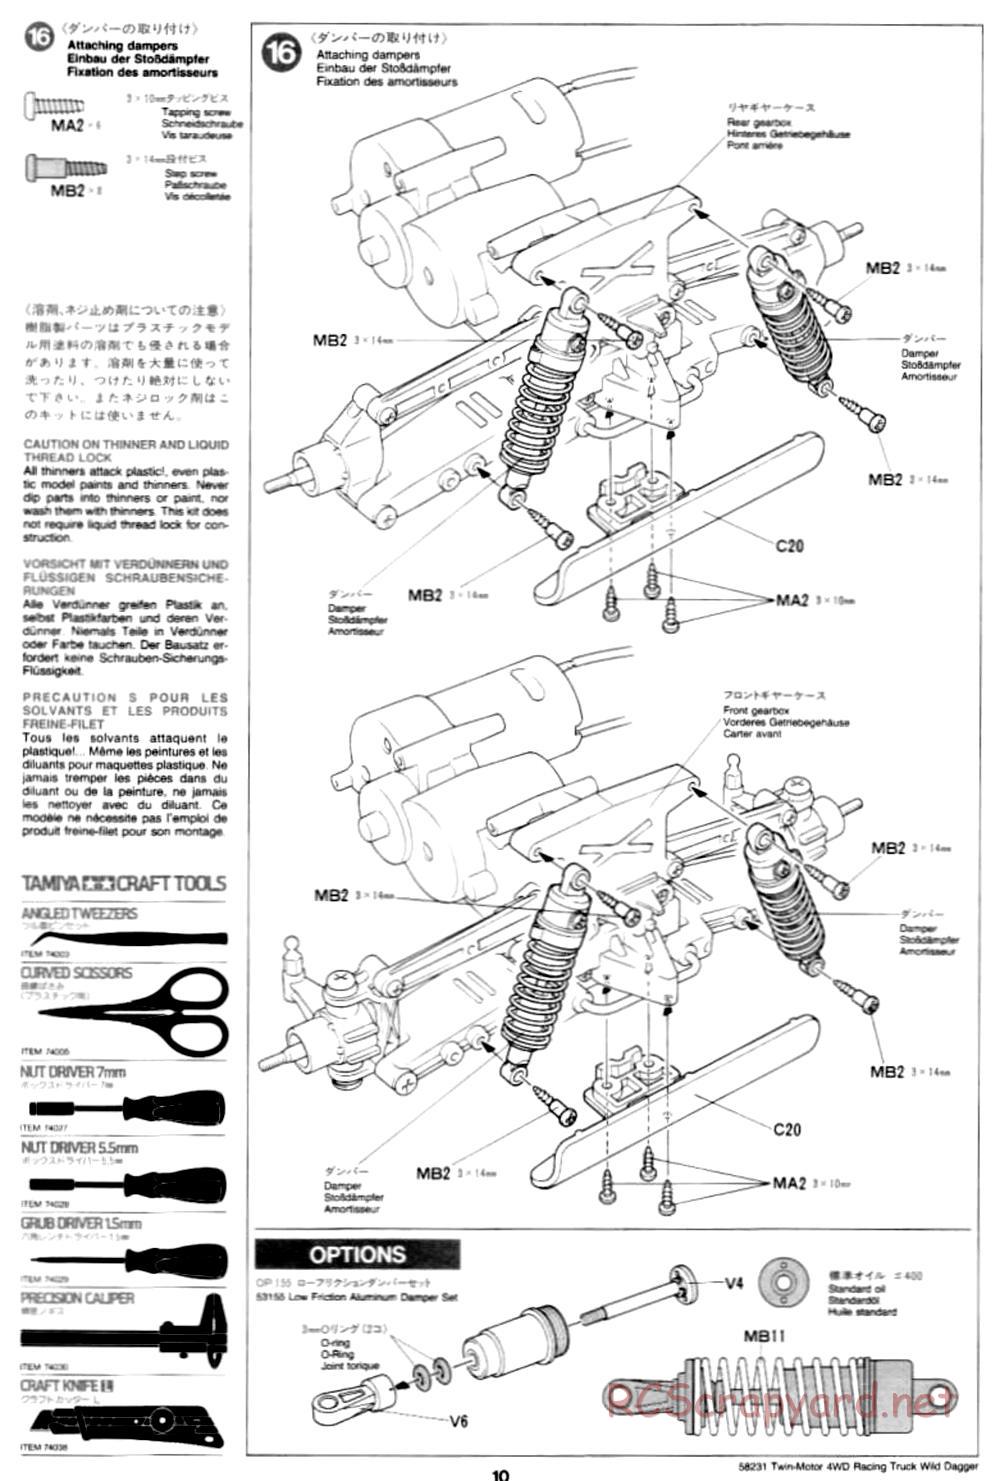 Tamiya - Wild Dagger - WR-01 Chassis - Manual - Page 10